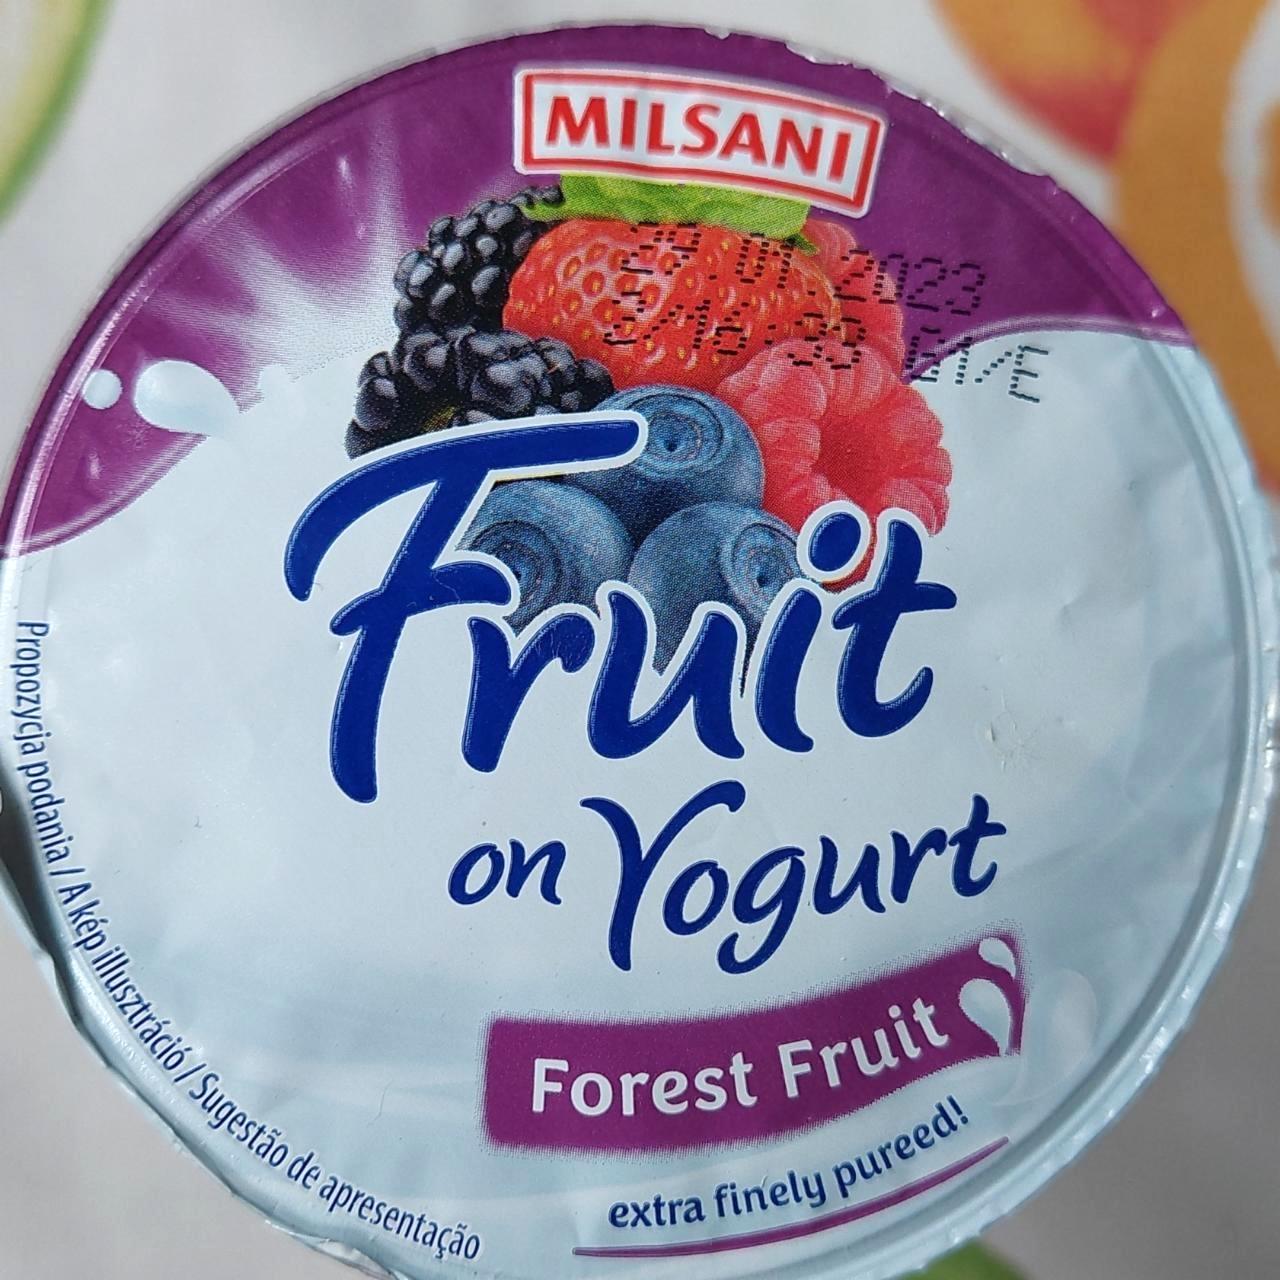 Képek - Fruit on yoghurt Forest fruit Milsani